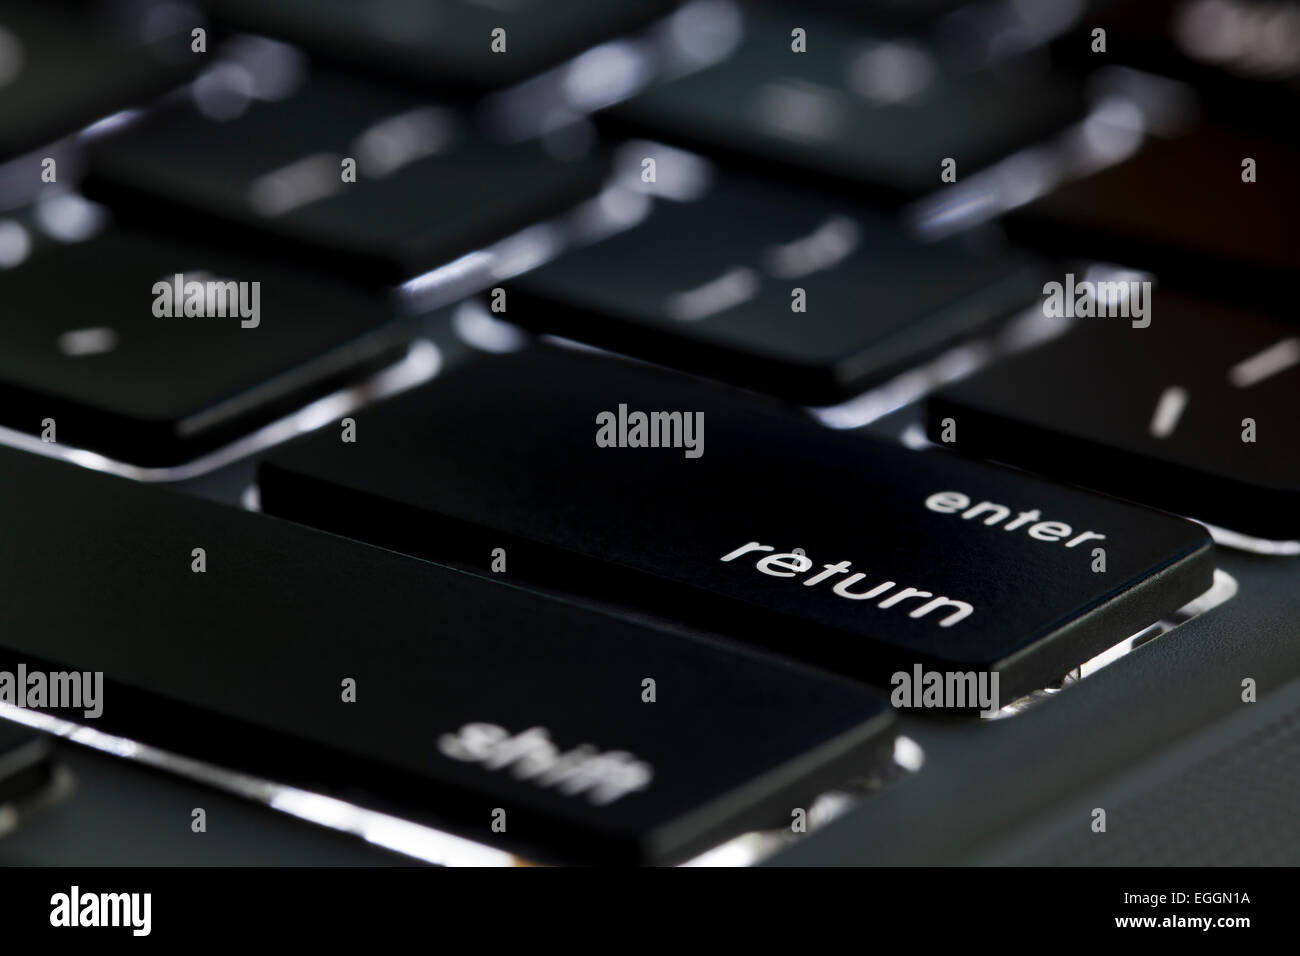 Return key keyboard immagini e fotografie stock ad alta risoluzione - Alamy